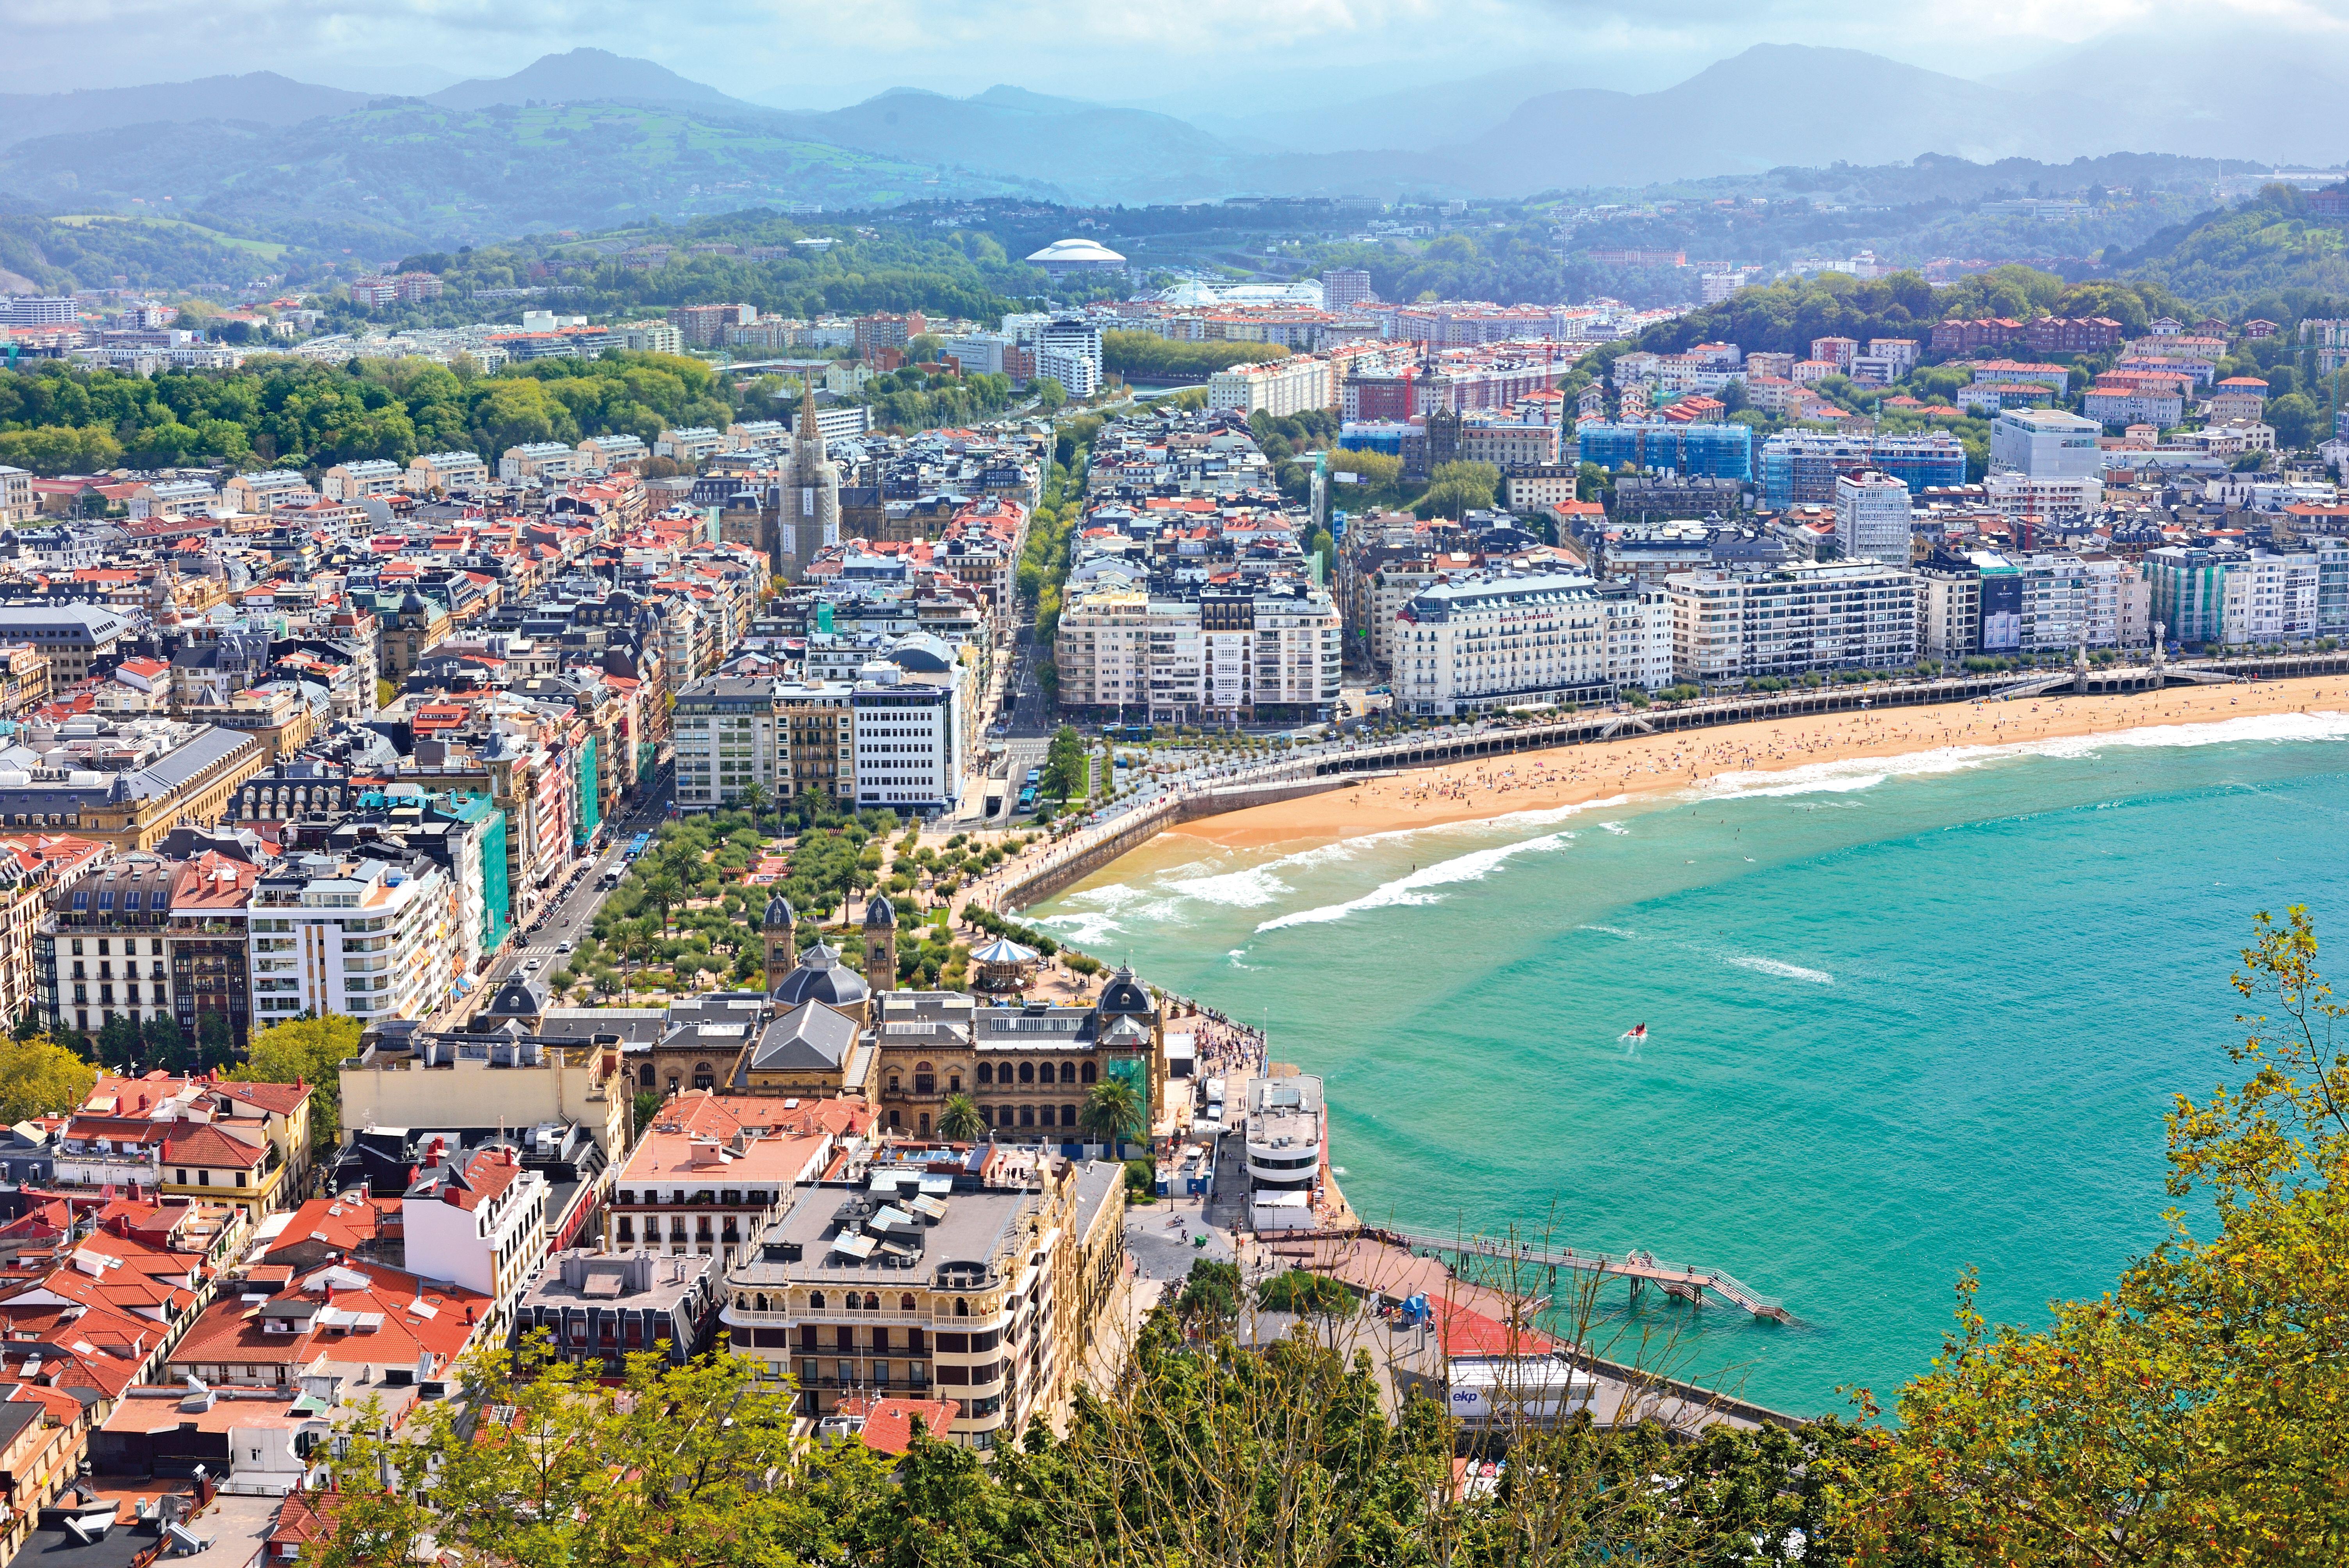 San Sebastián was named Spain's best coastal town by consumer watchdog Which?